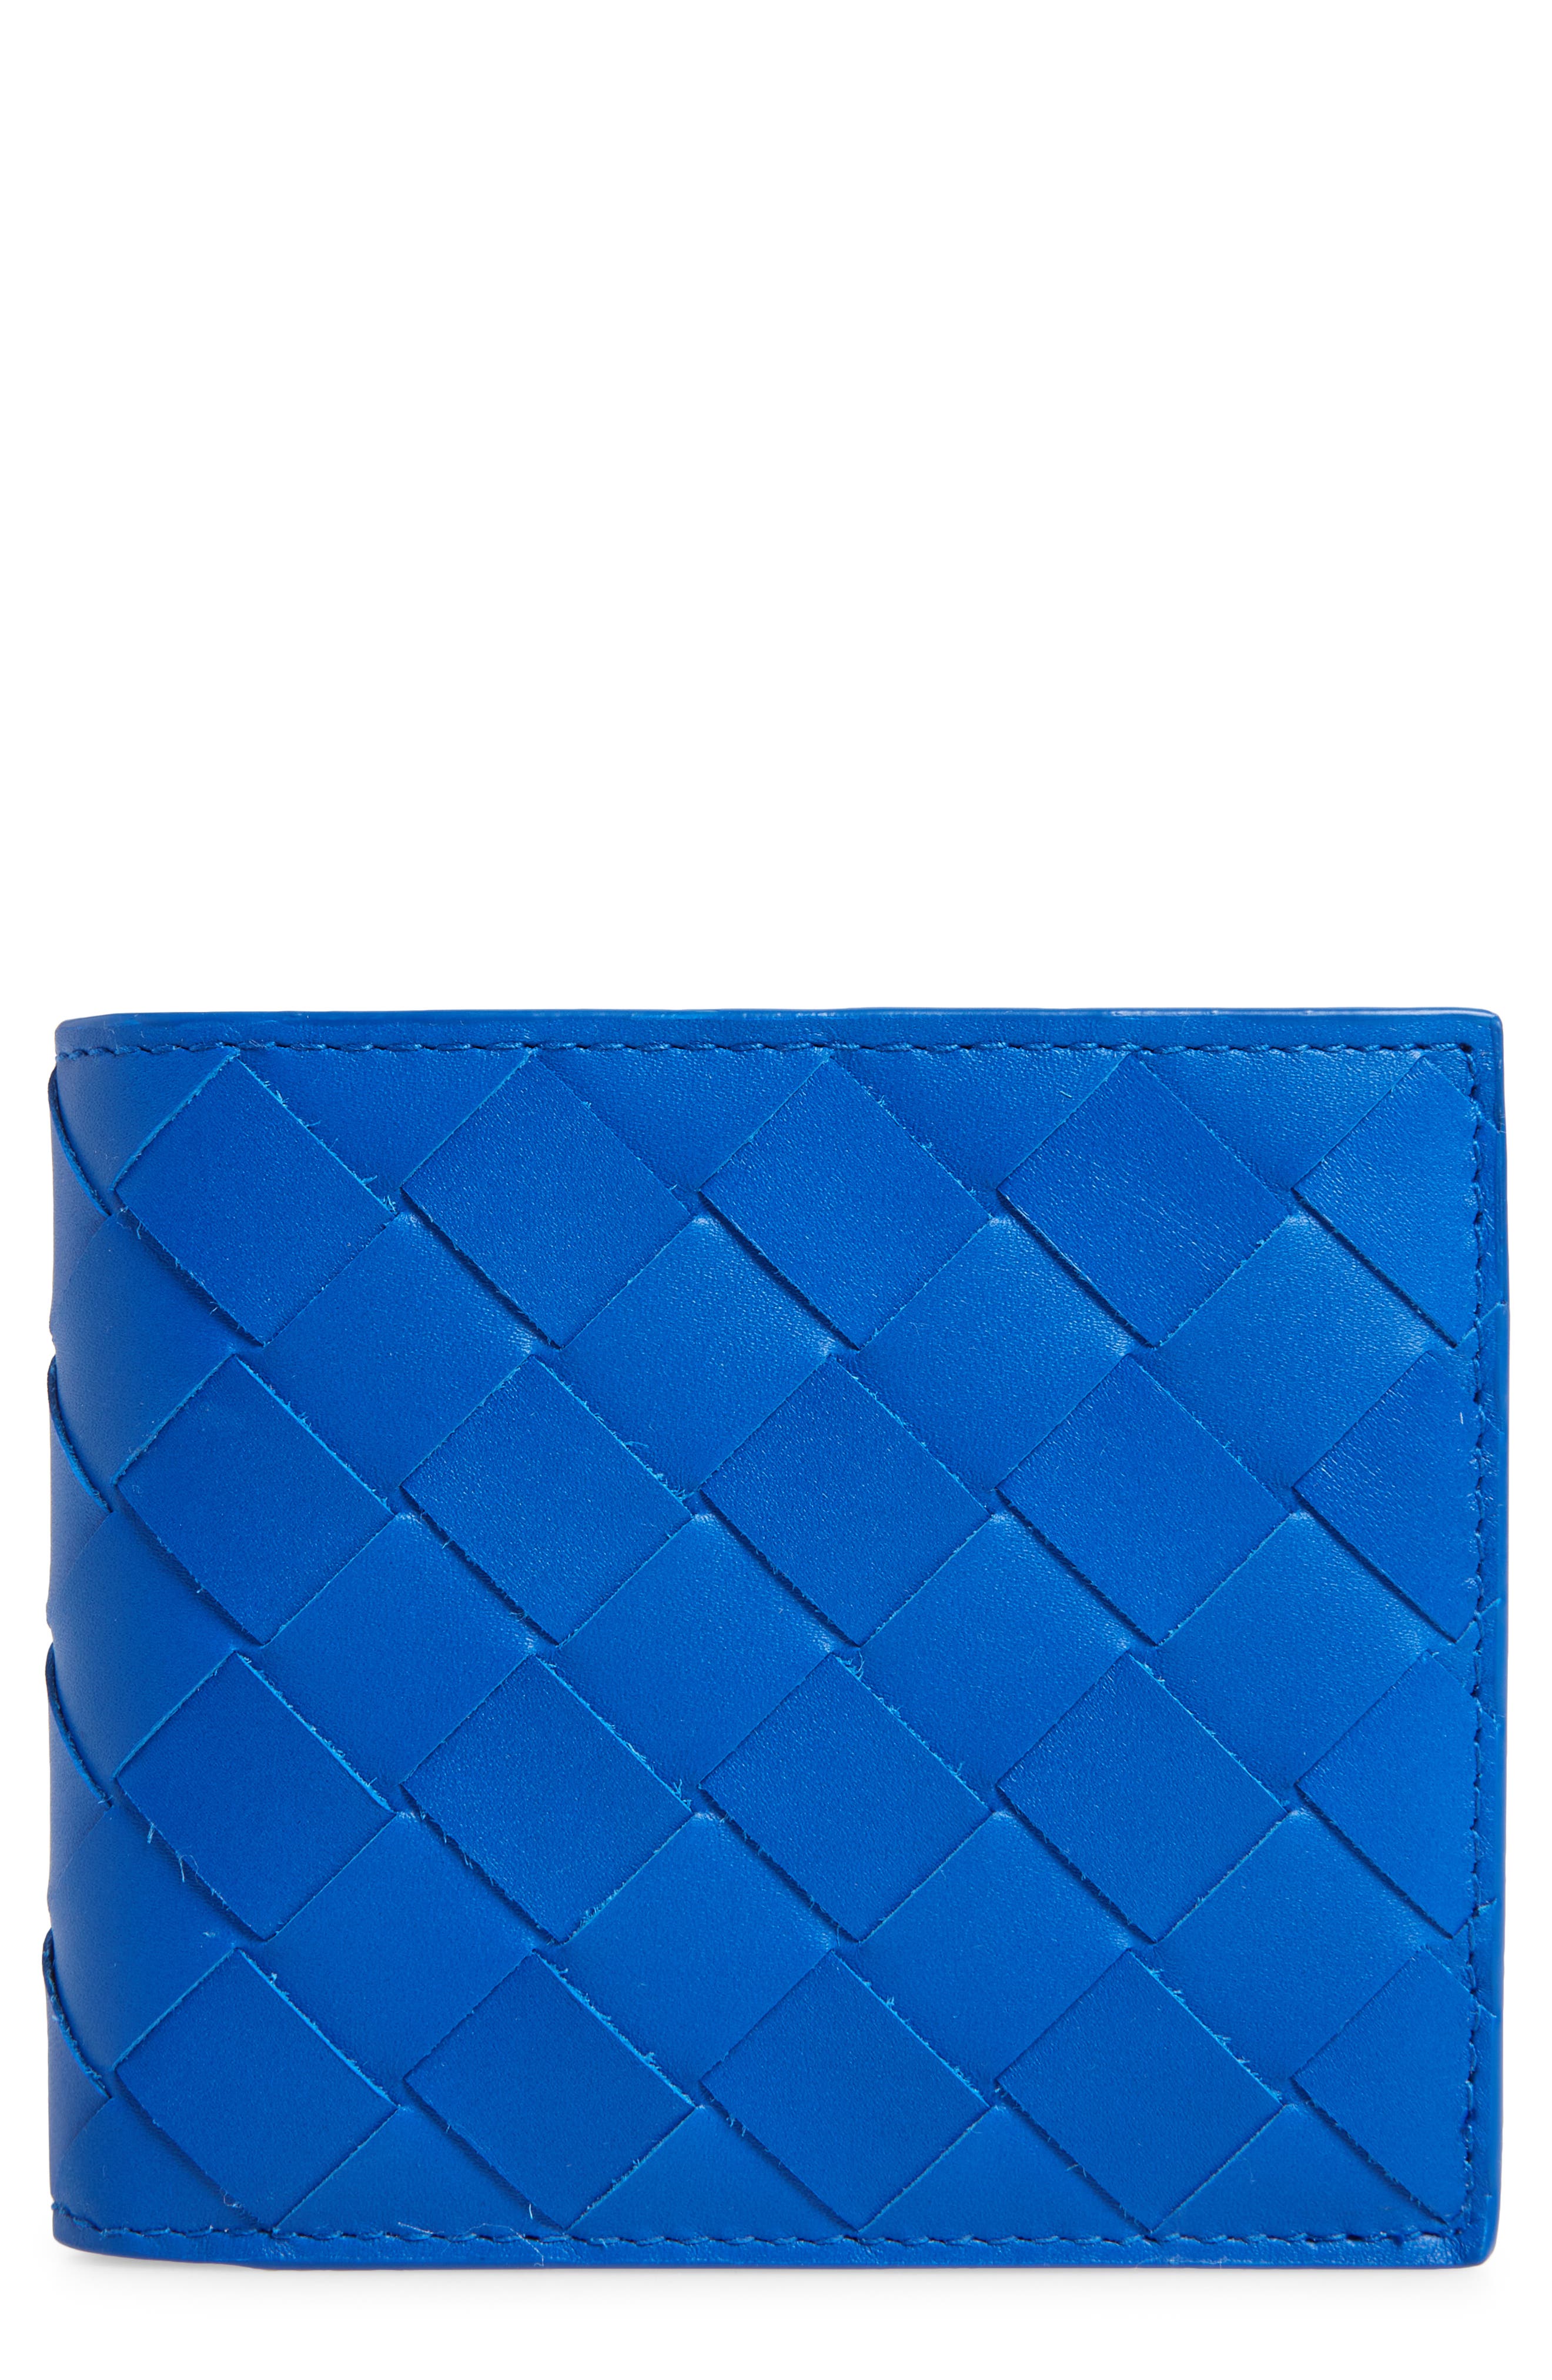 Bottega Veneta Intrecciato Leather Wallet in Cobalt